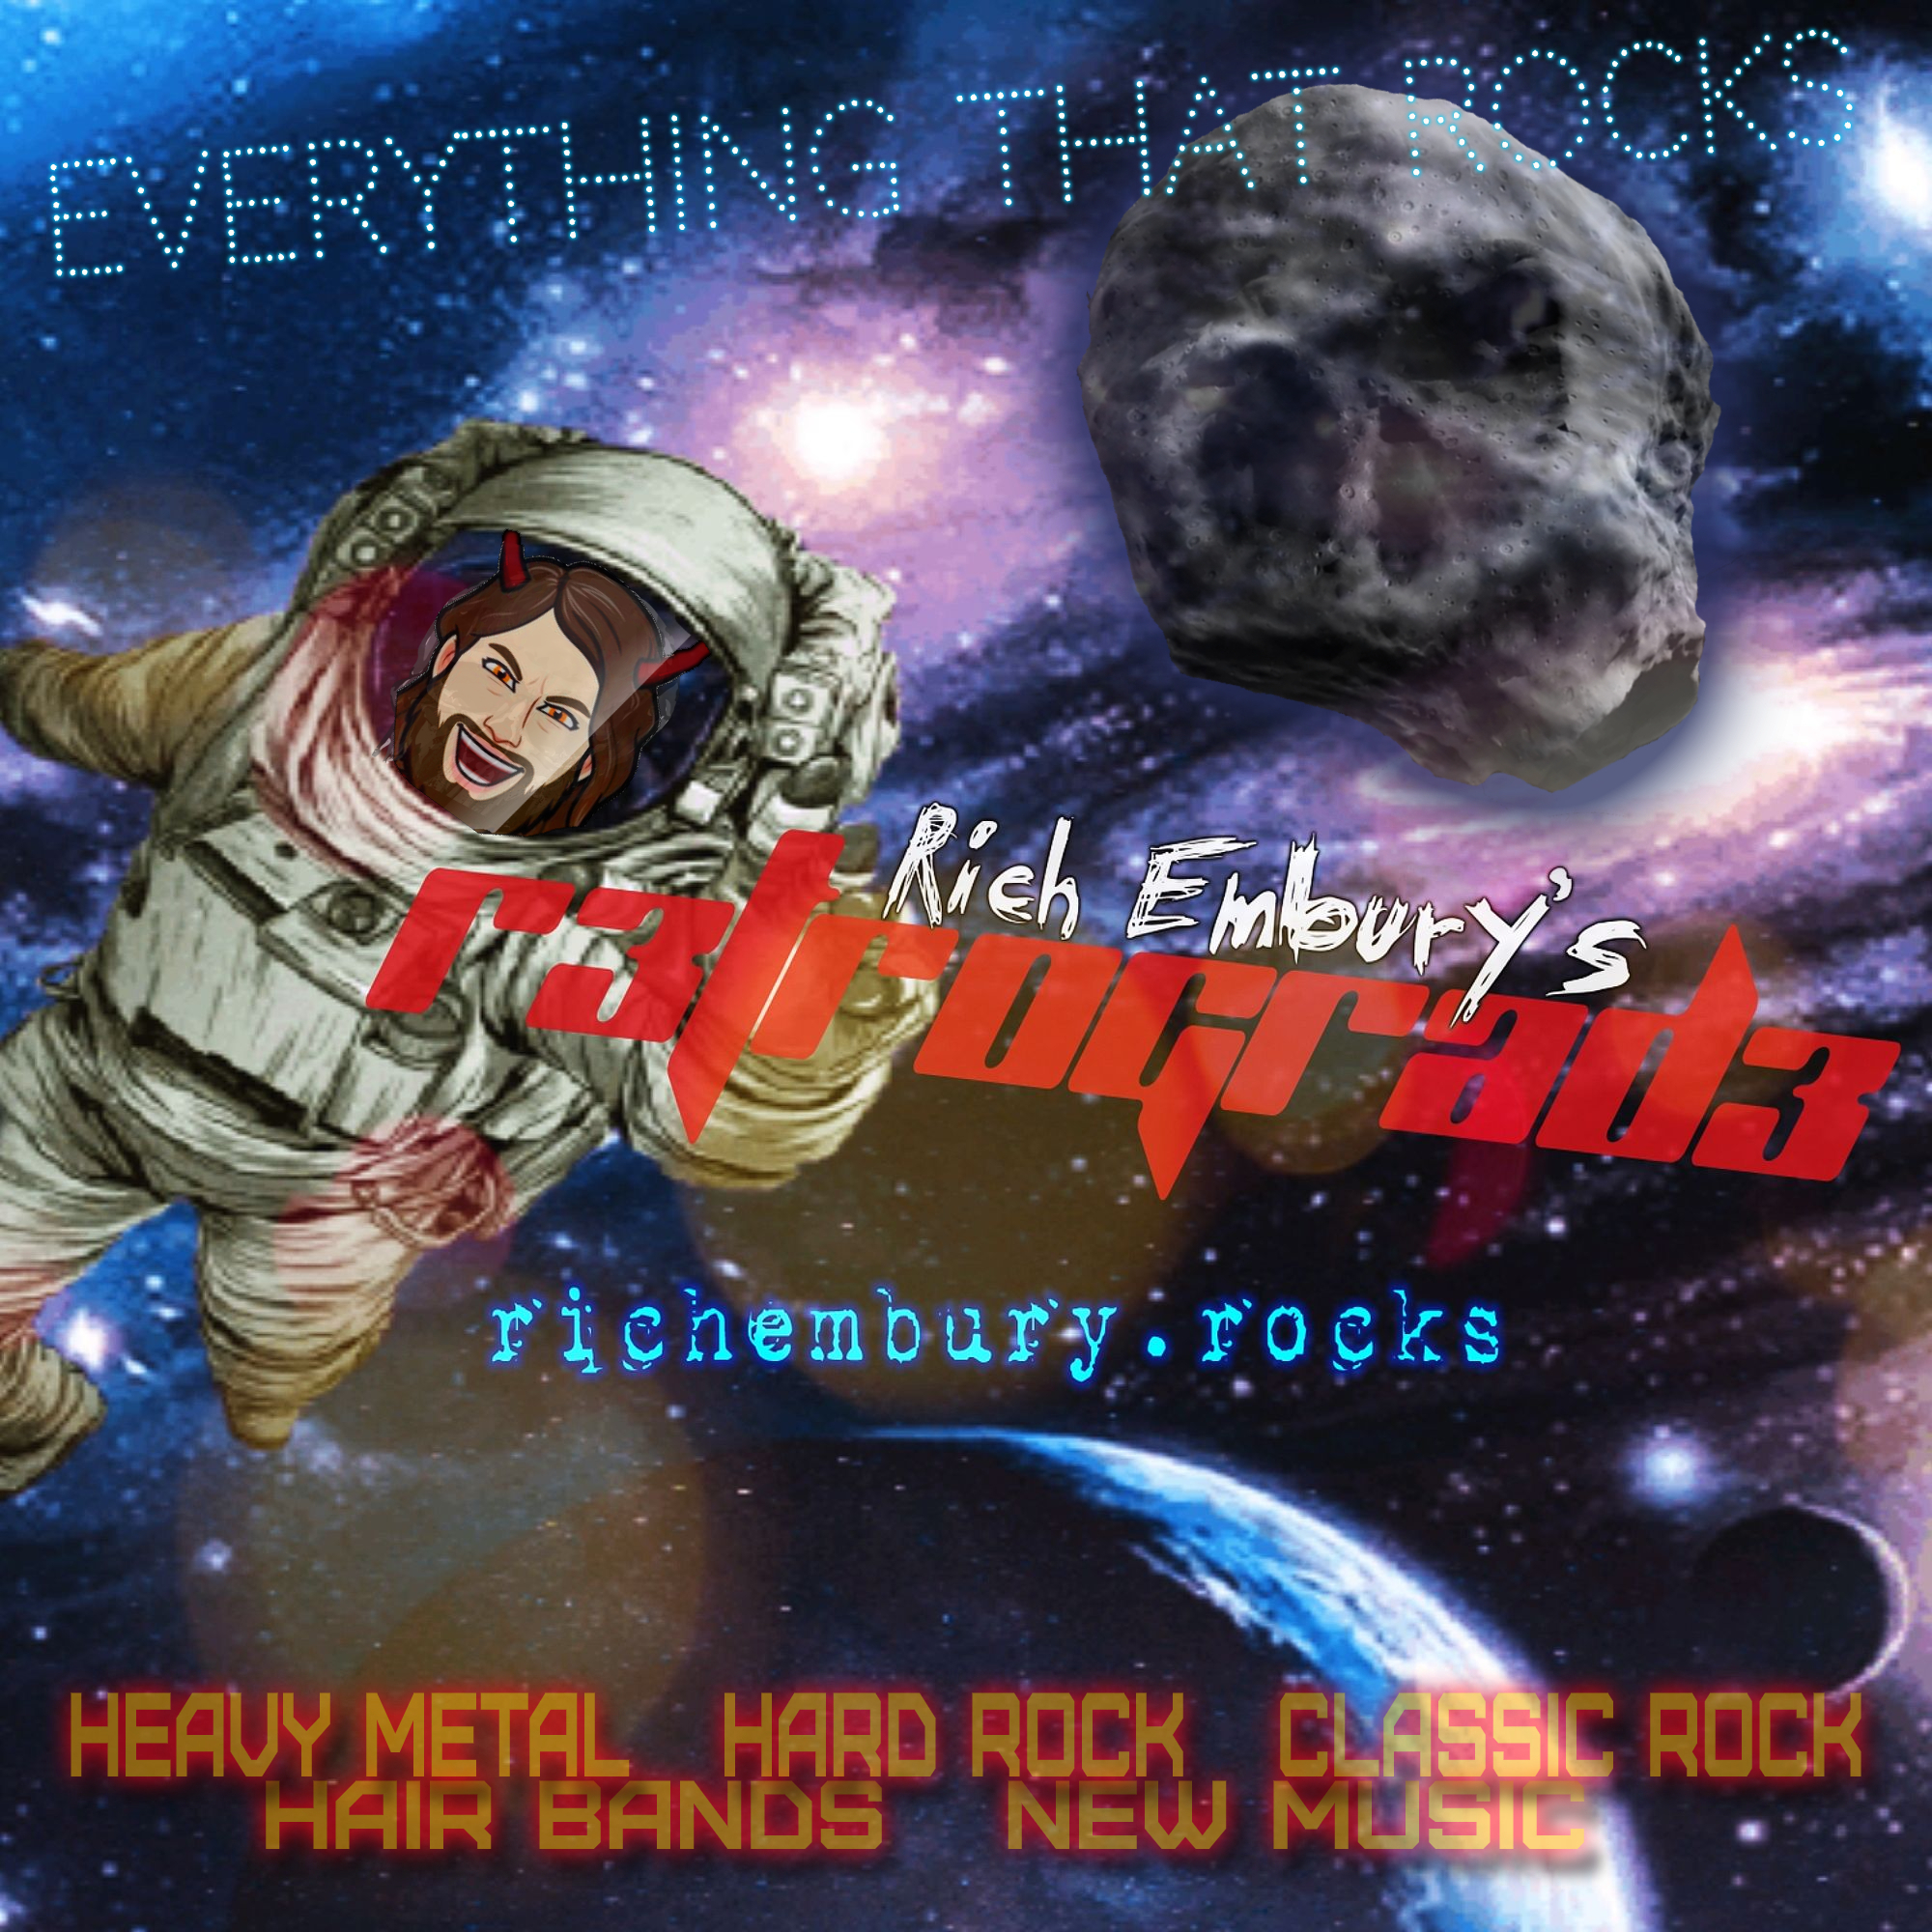 Rich Embury’s R3TROGRAD3: Classic Rock Party II post thumbnail image